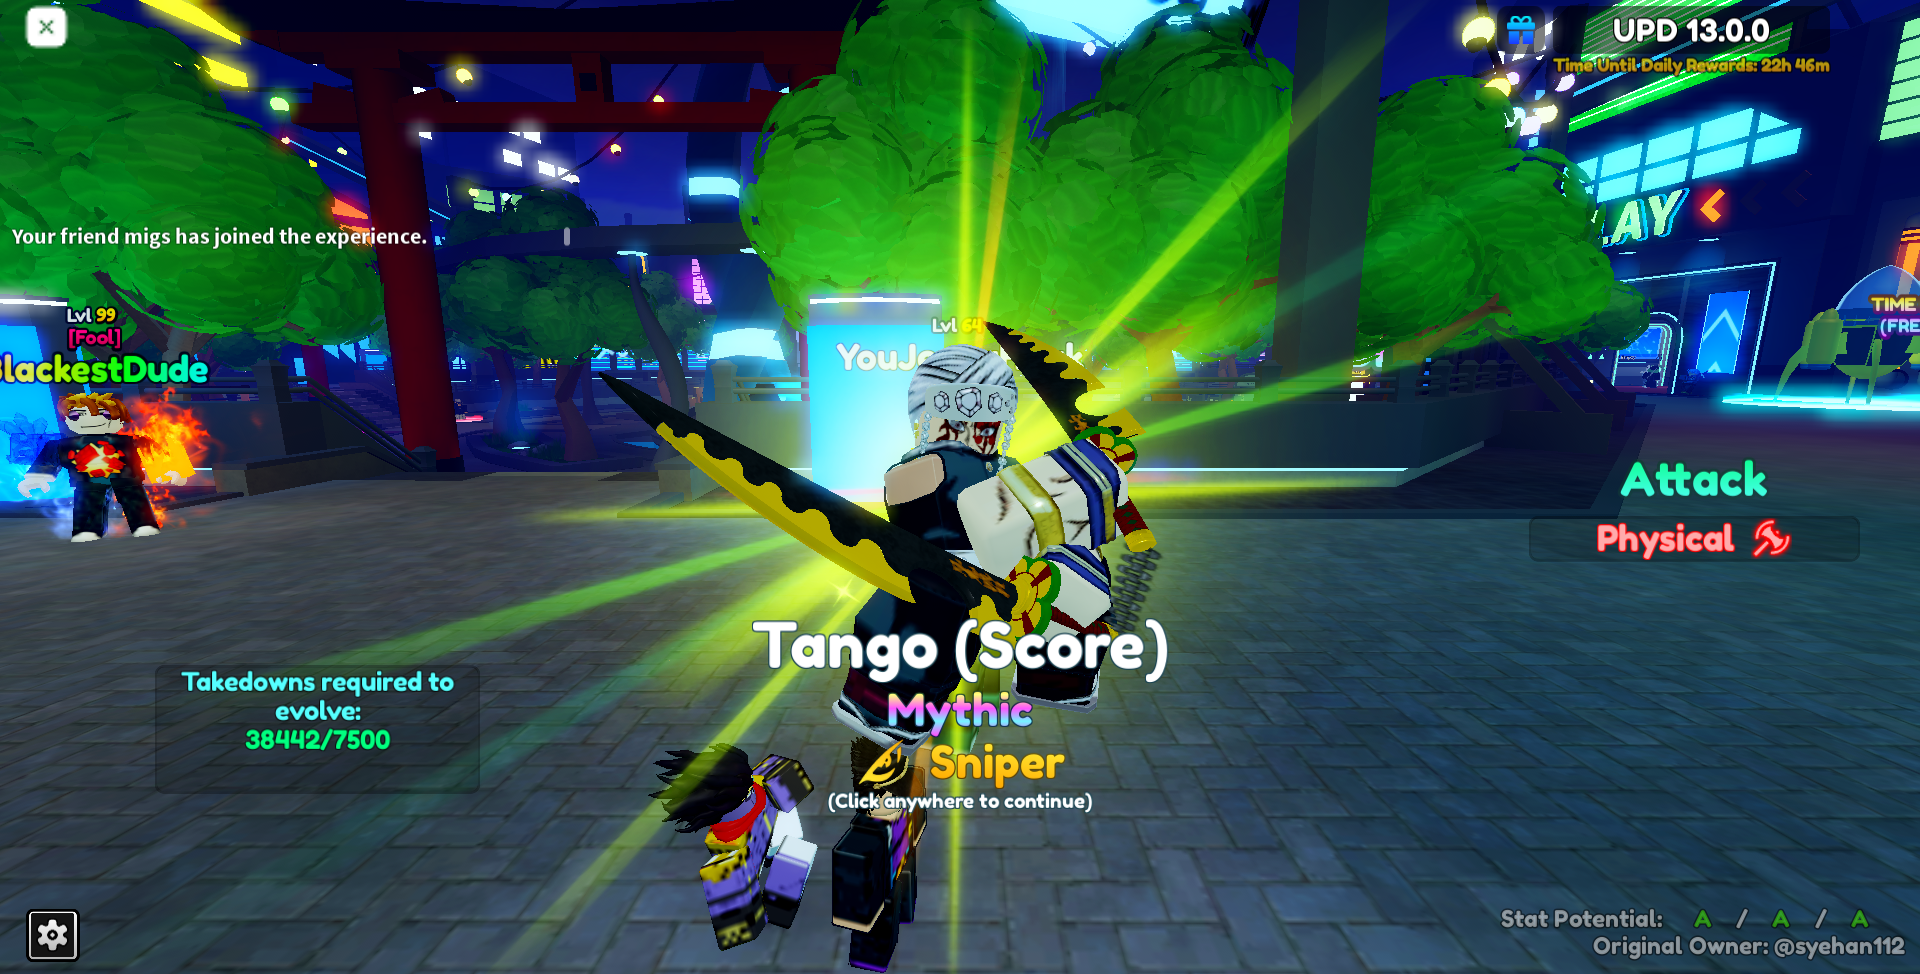 Got Sniper trait on Tango unevo